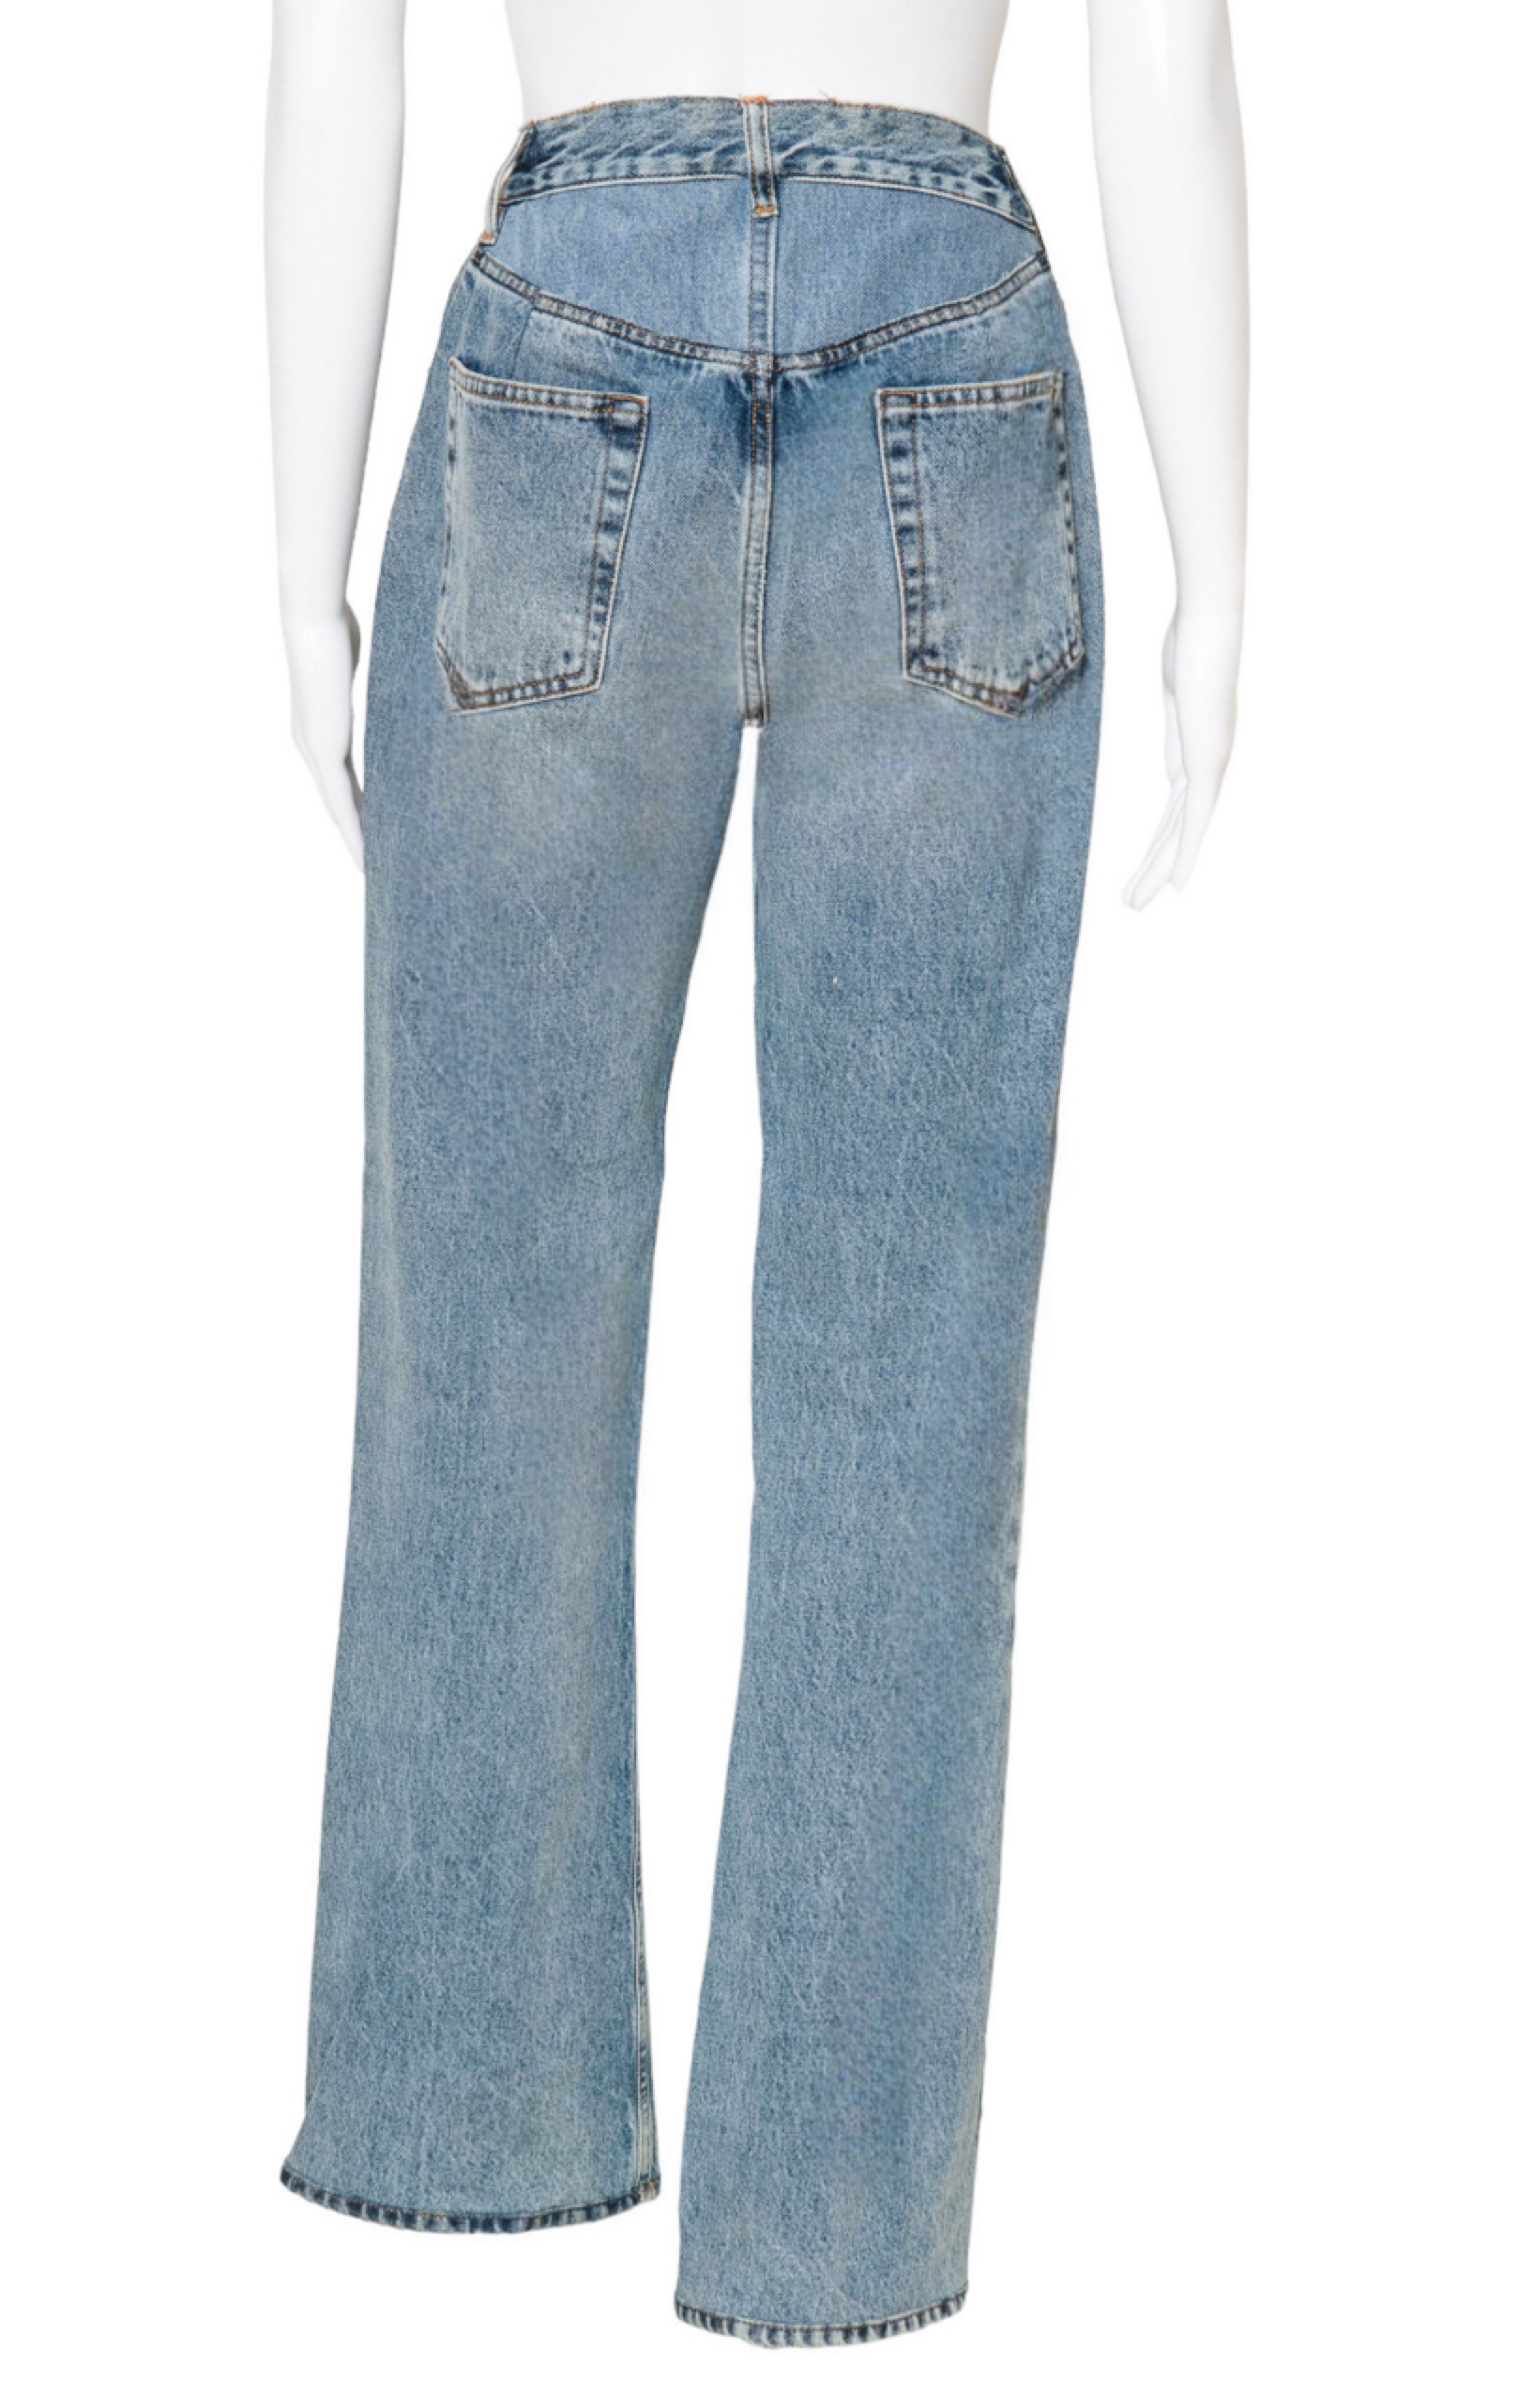 BALENCIAGA Jeans Size: No size tags, fit like US 25/0